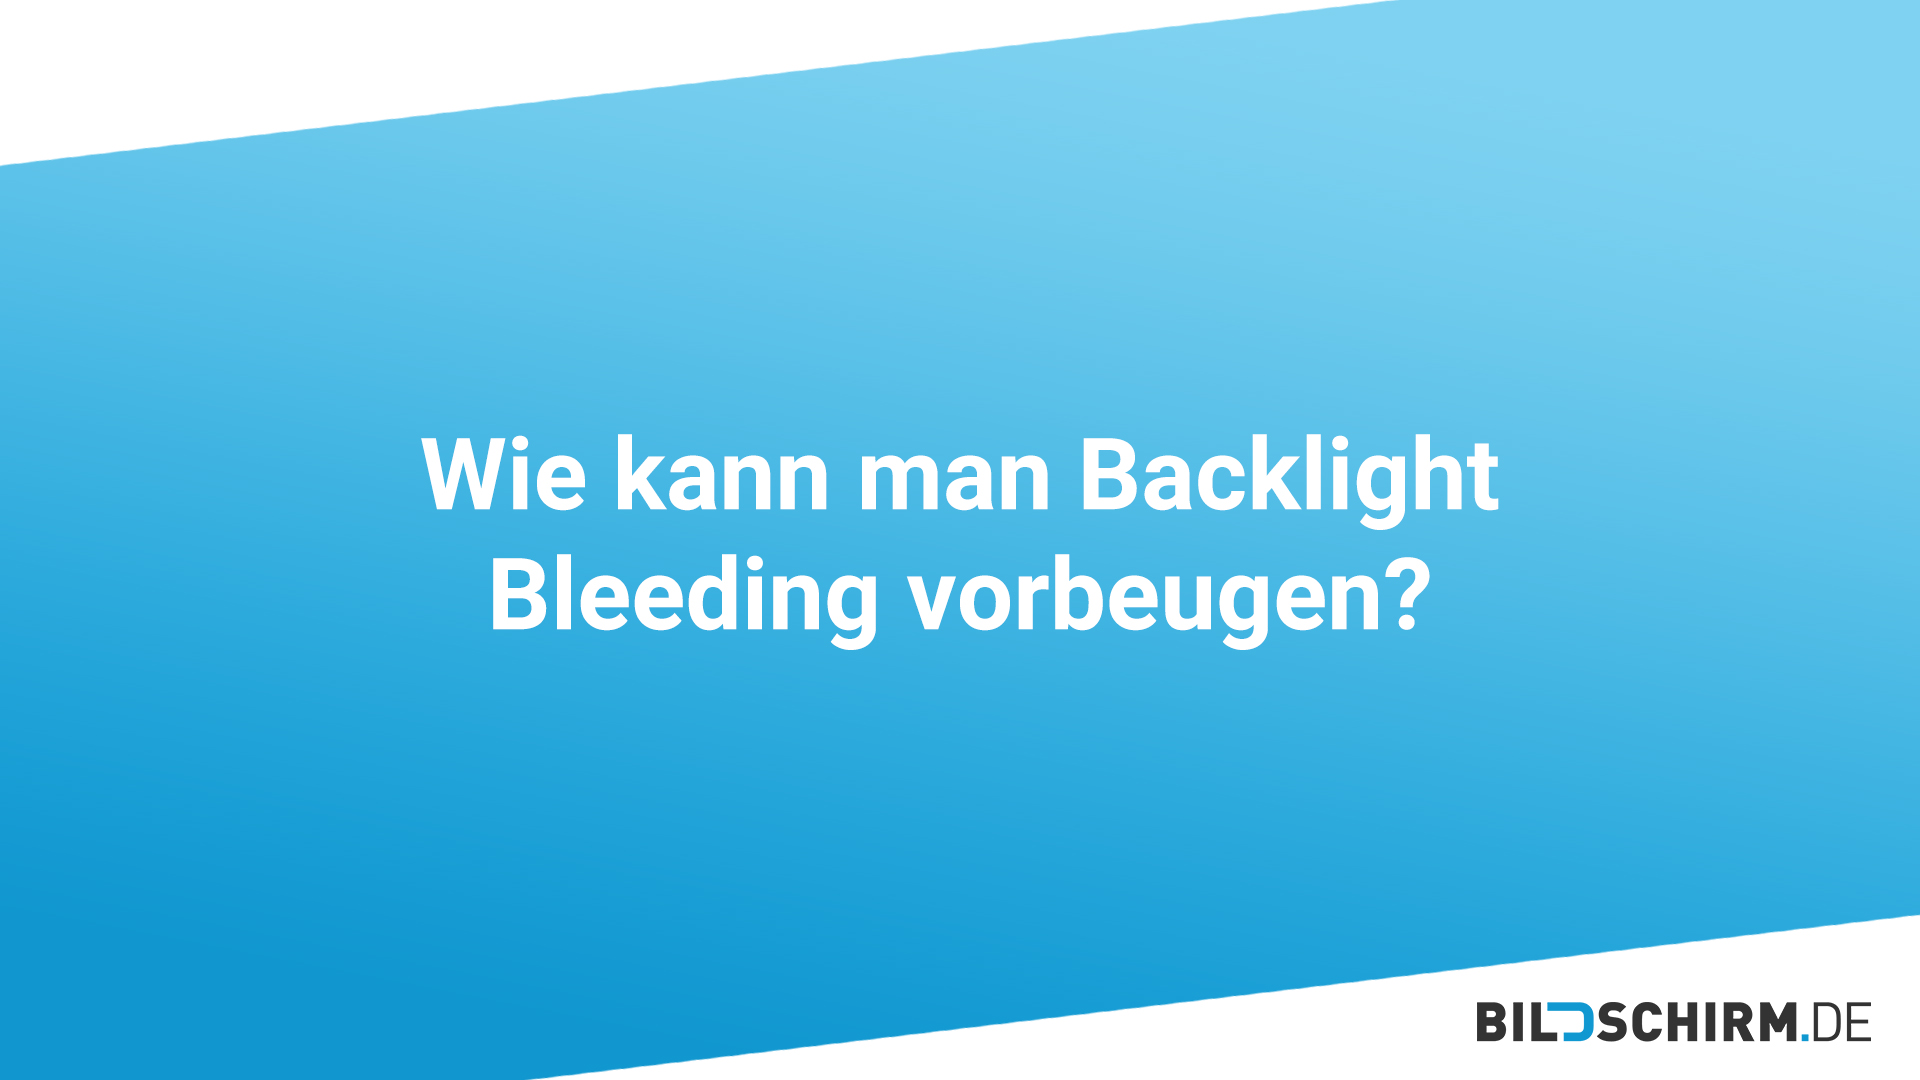 Backlight Bleeding vorbeugen verhindern vermindern